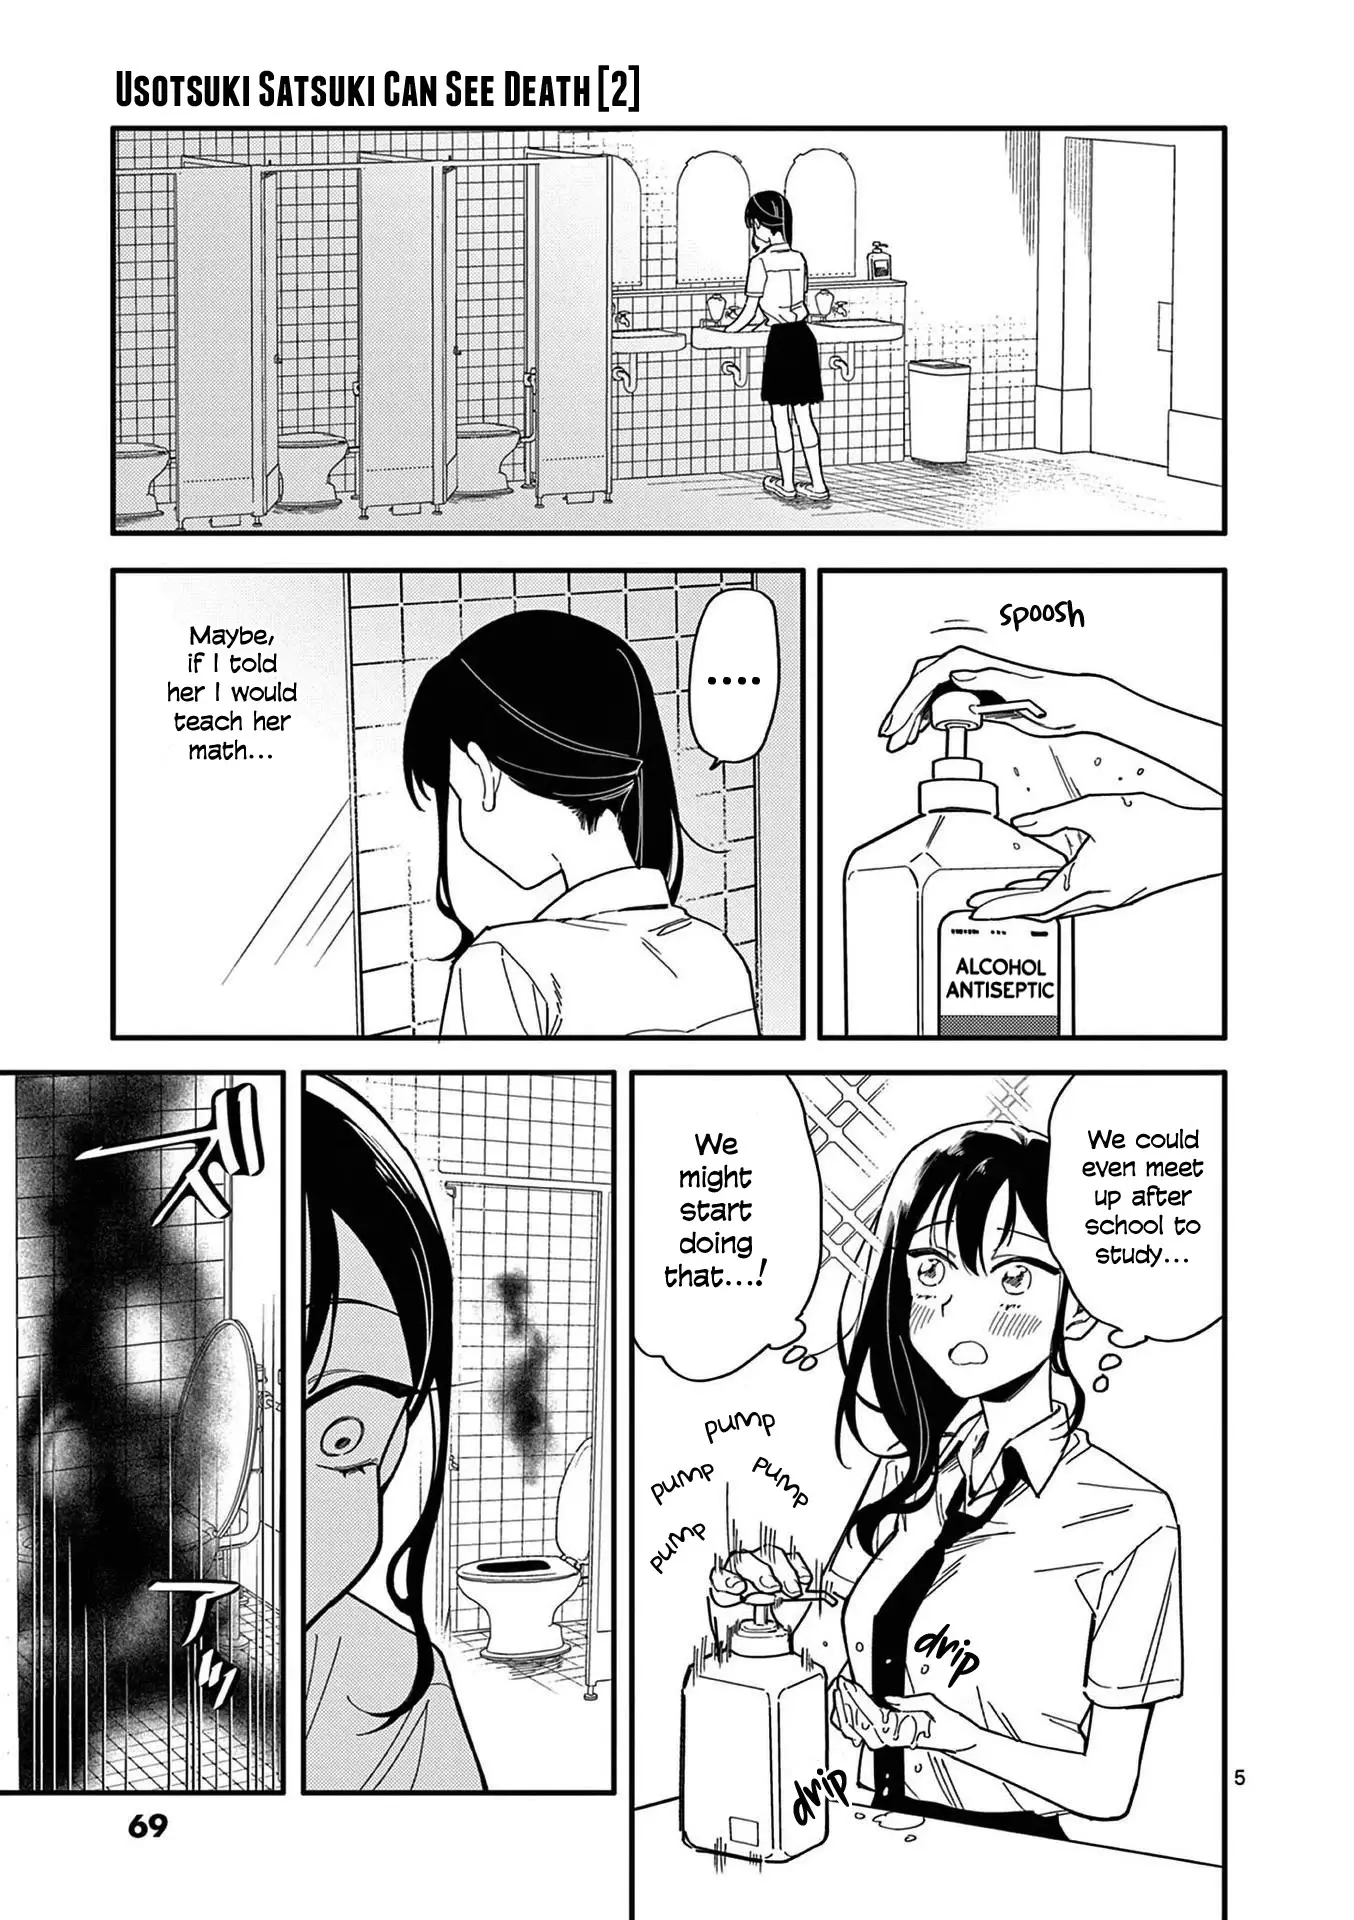 Liar Satsuki Can See Death - 12 page 5